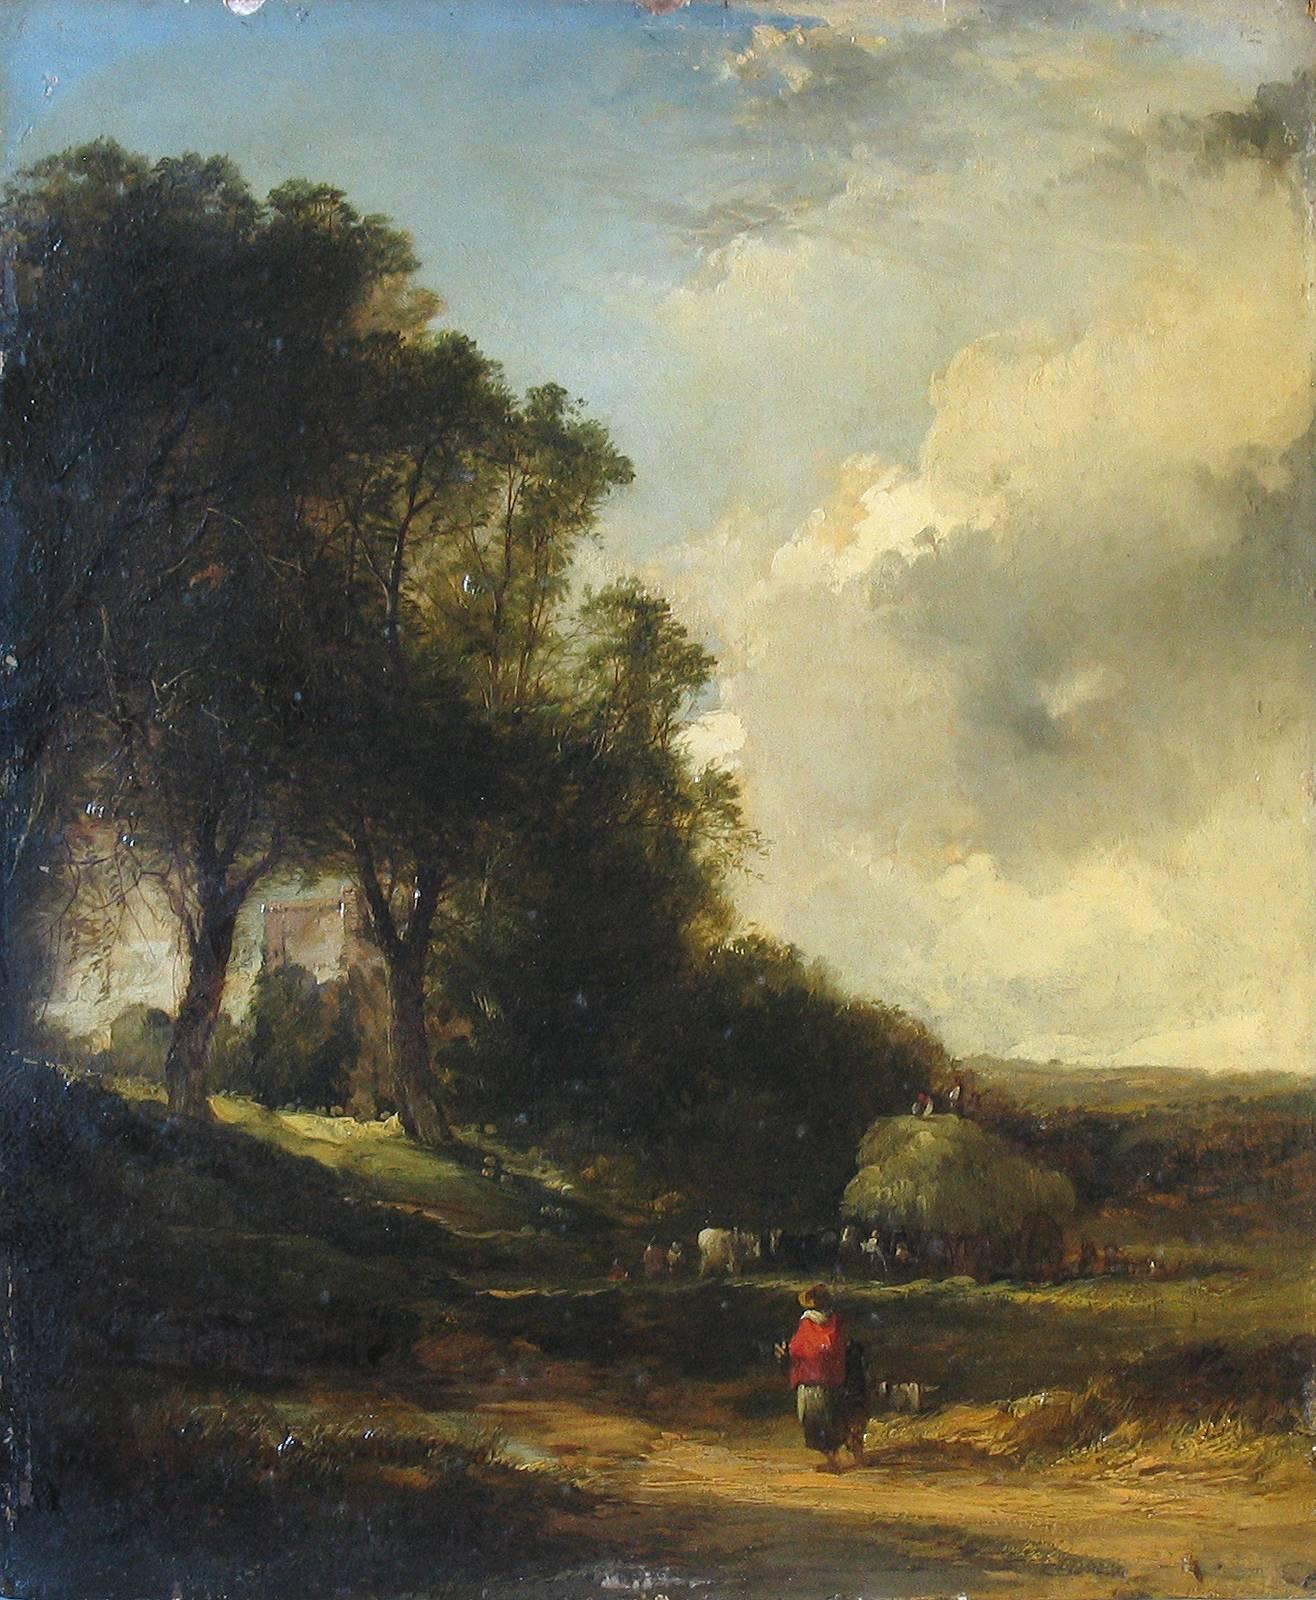 Attributed to Richard Parkes Bonington, Oil on Millboard, Landscape 2